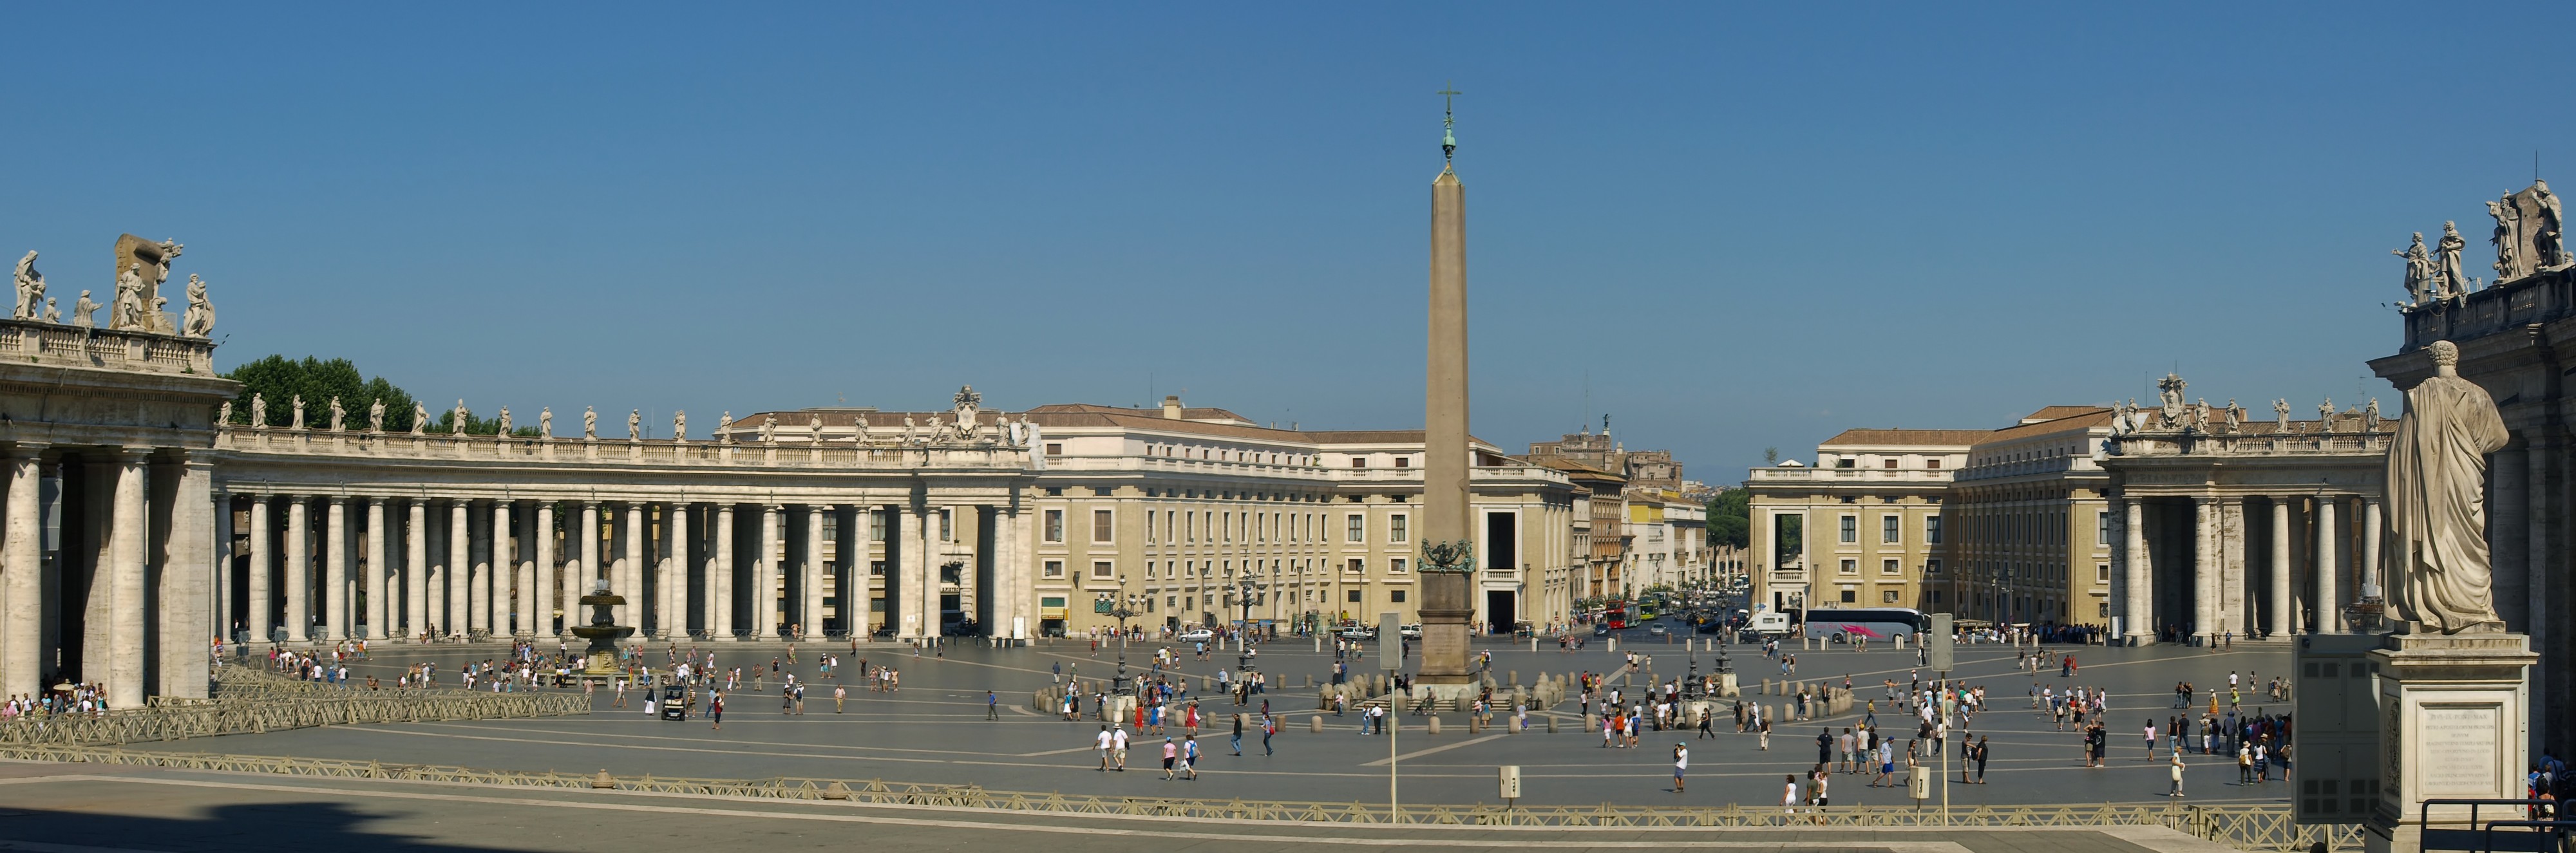 Panorama of Saint Peter's Square